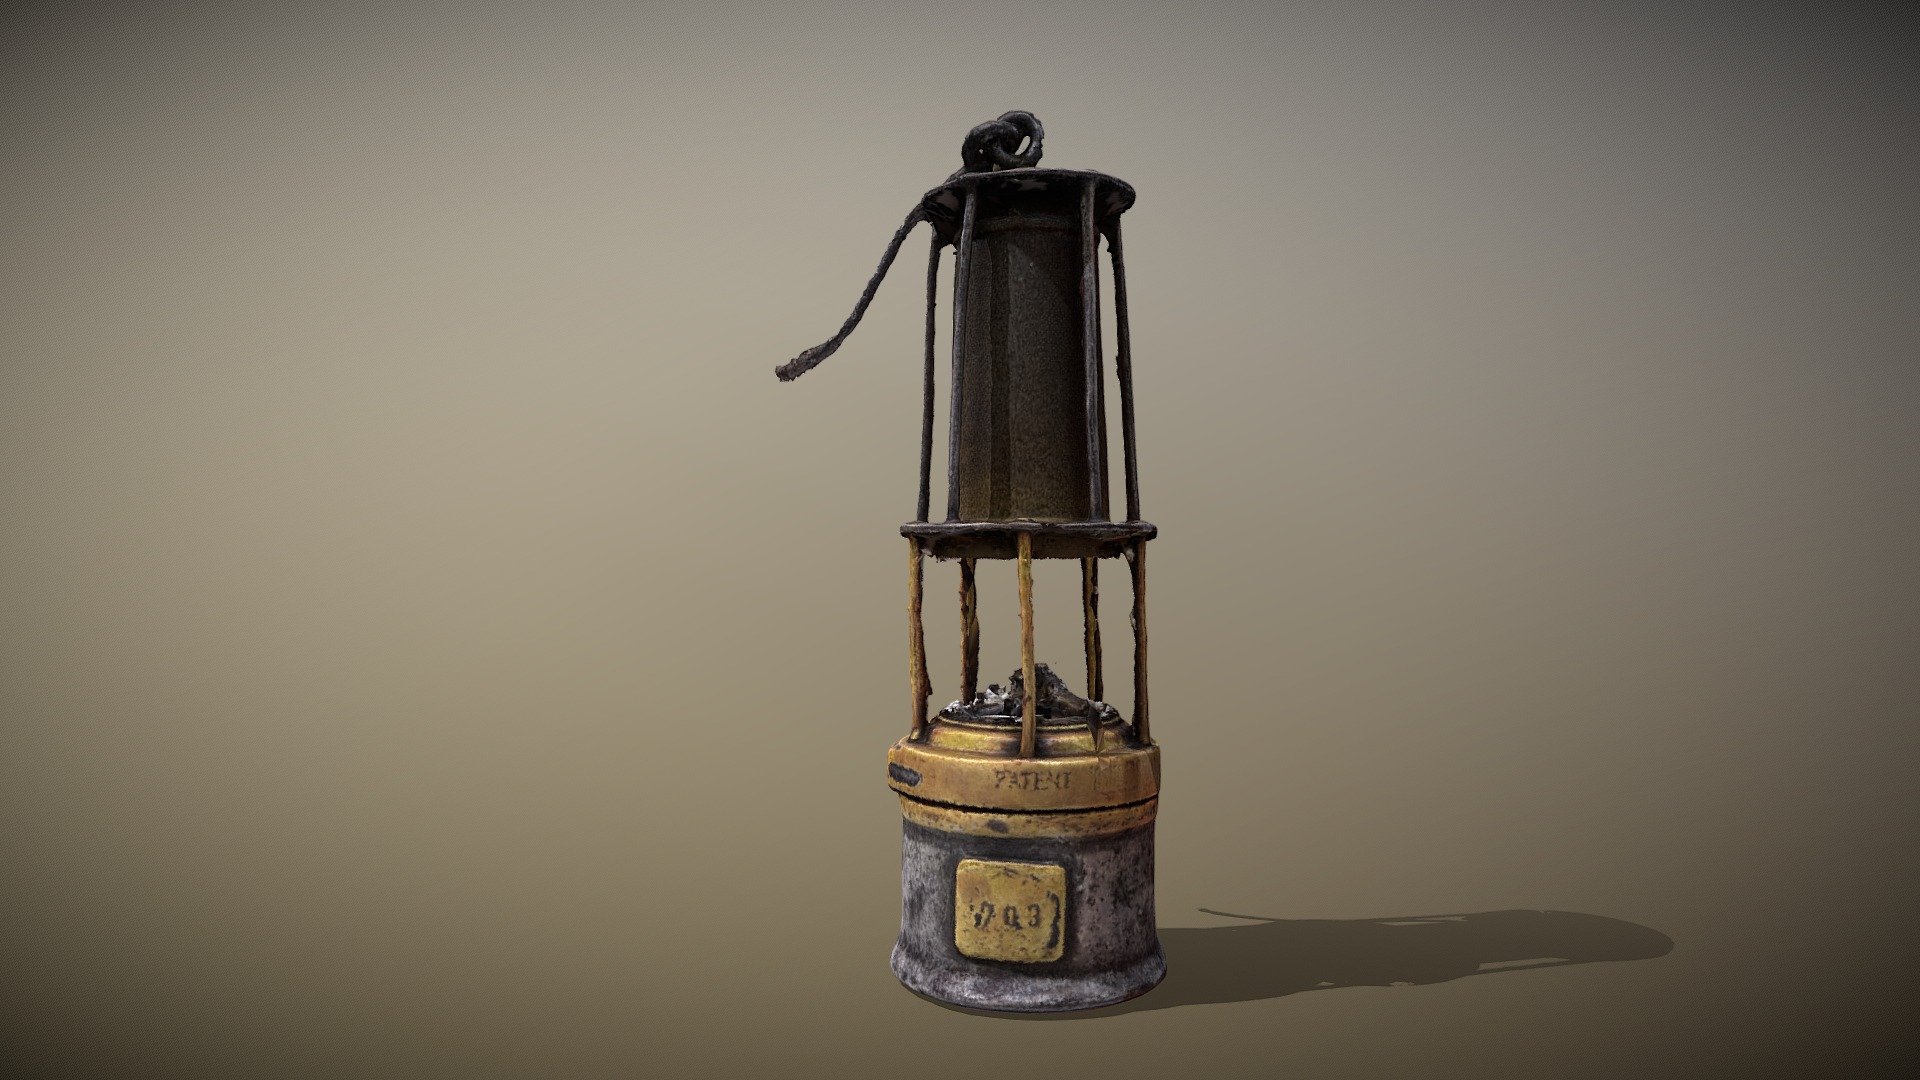 Petrol lamp with a firestone igniter